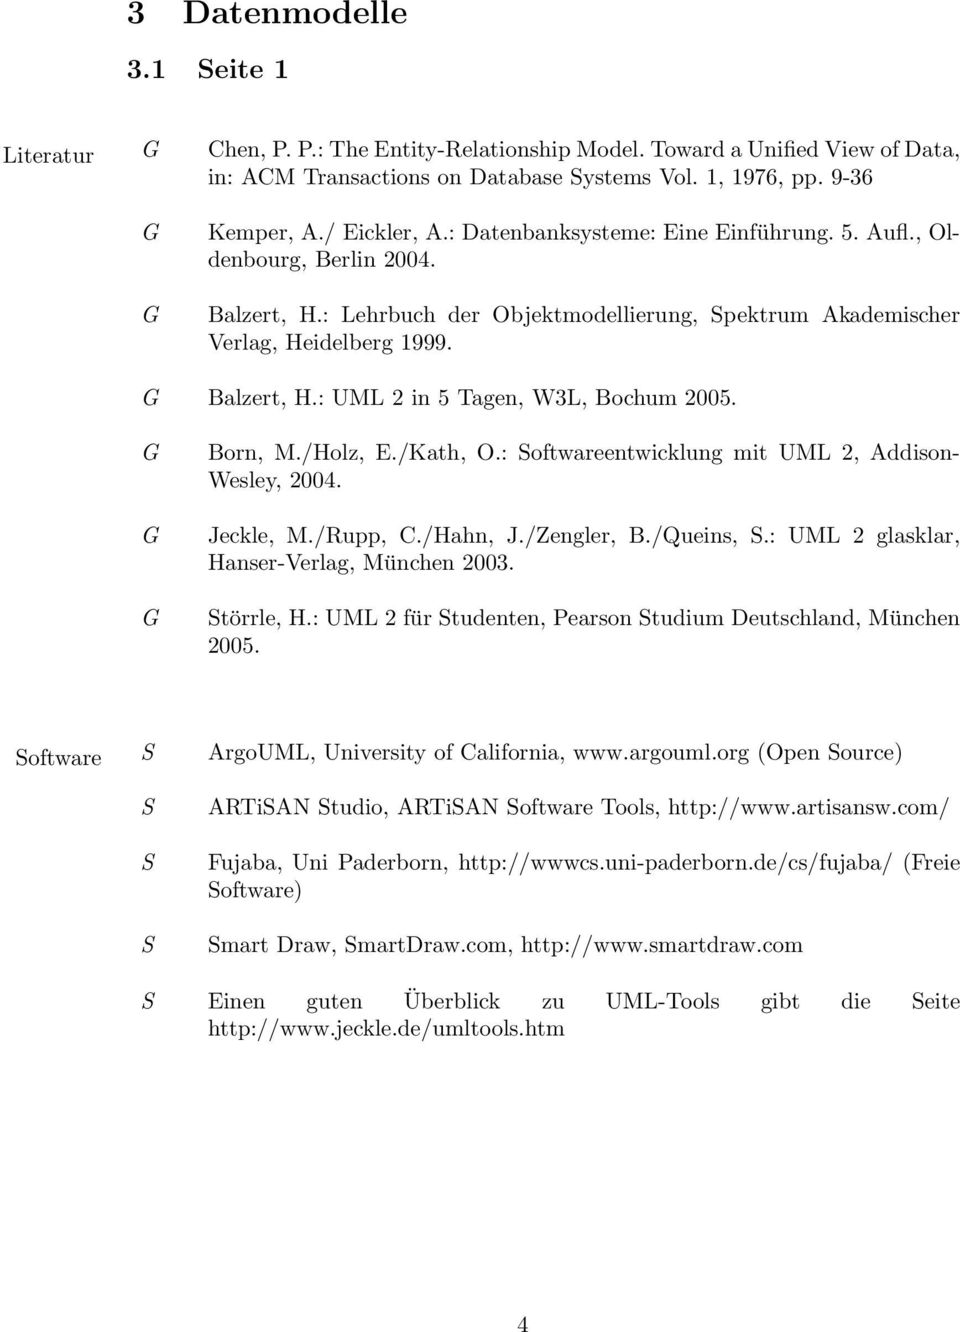 Born, M./Holz, E./Kath, O.: oftwareentwicklung mit UML 2, Addison- Wesley, 2004. Jeckle, M./Rupp, C./Hahn, J./Zengler, B./Queins,.: UML 2 glasklar, Hanser-Verlag, München 2003. törrle, H.